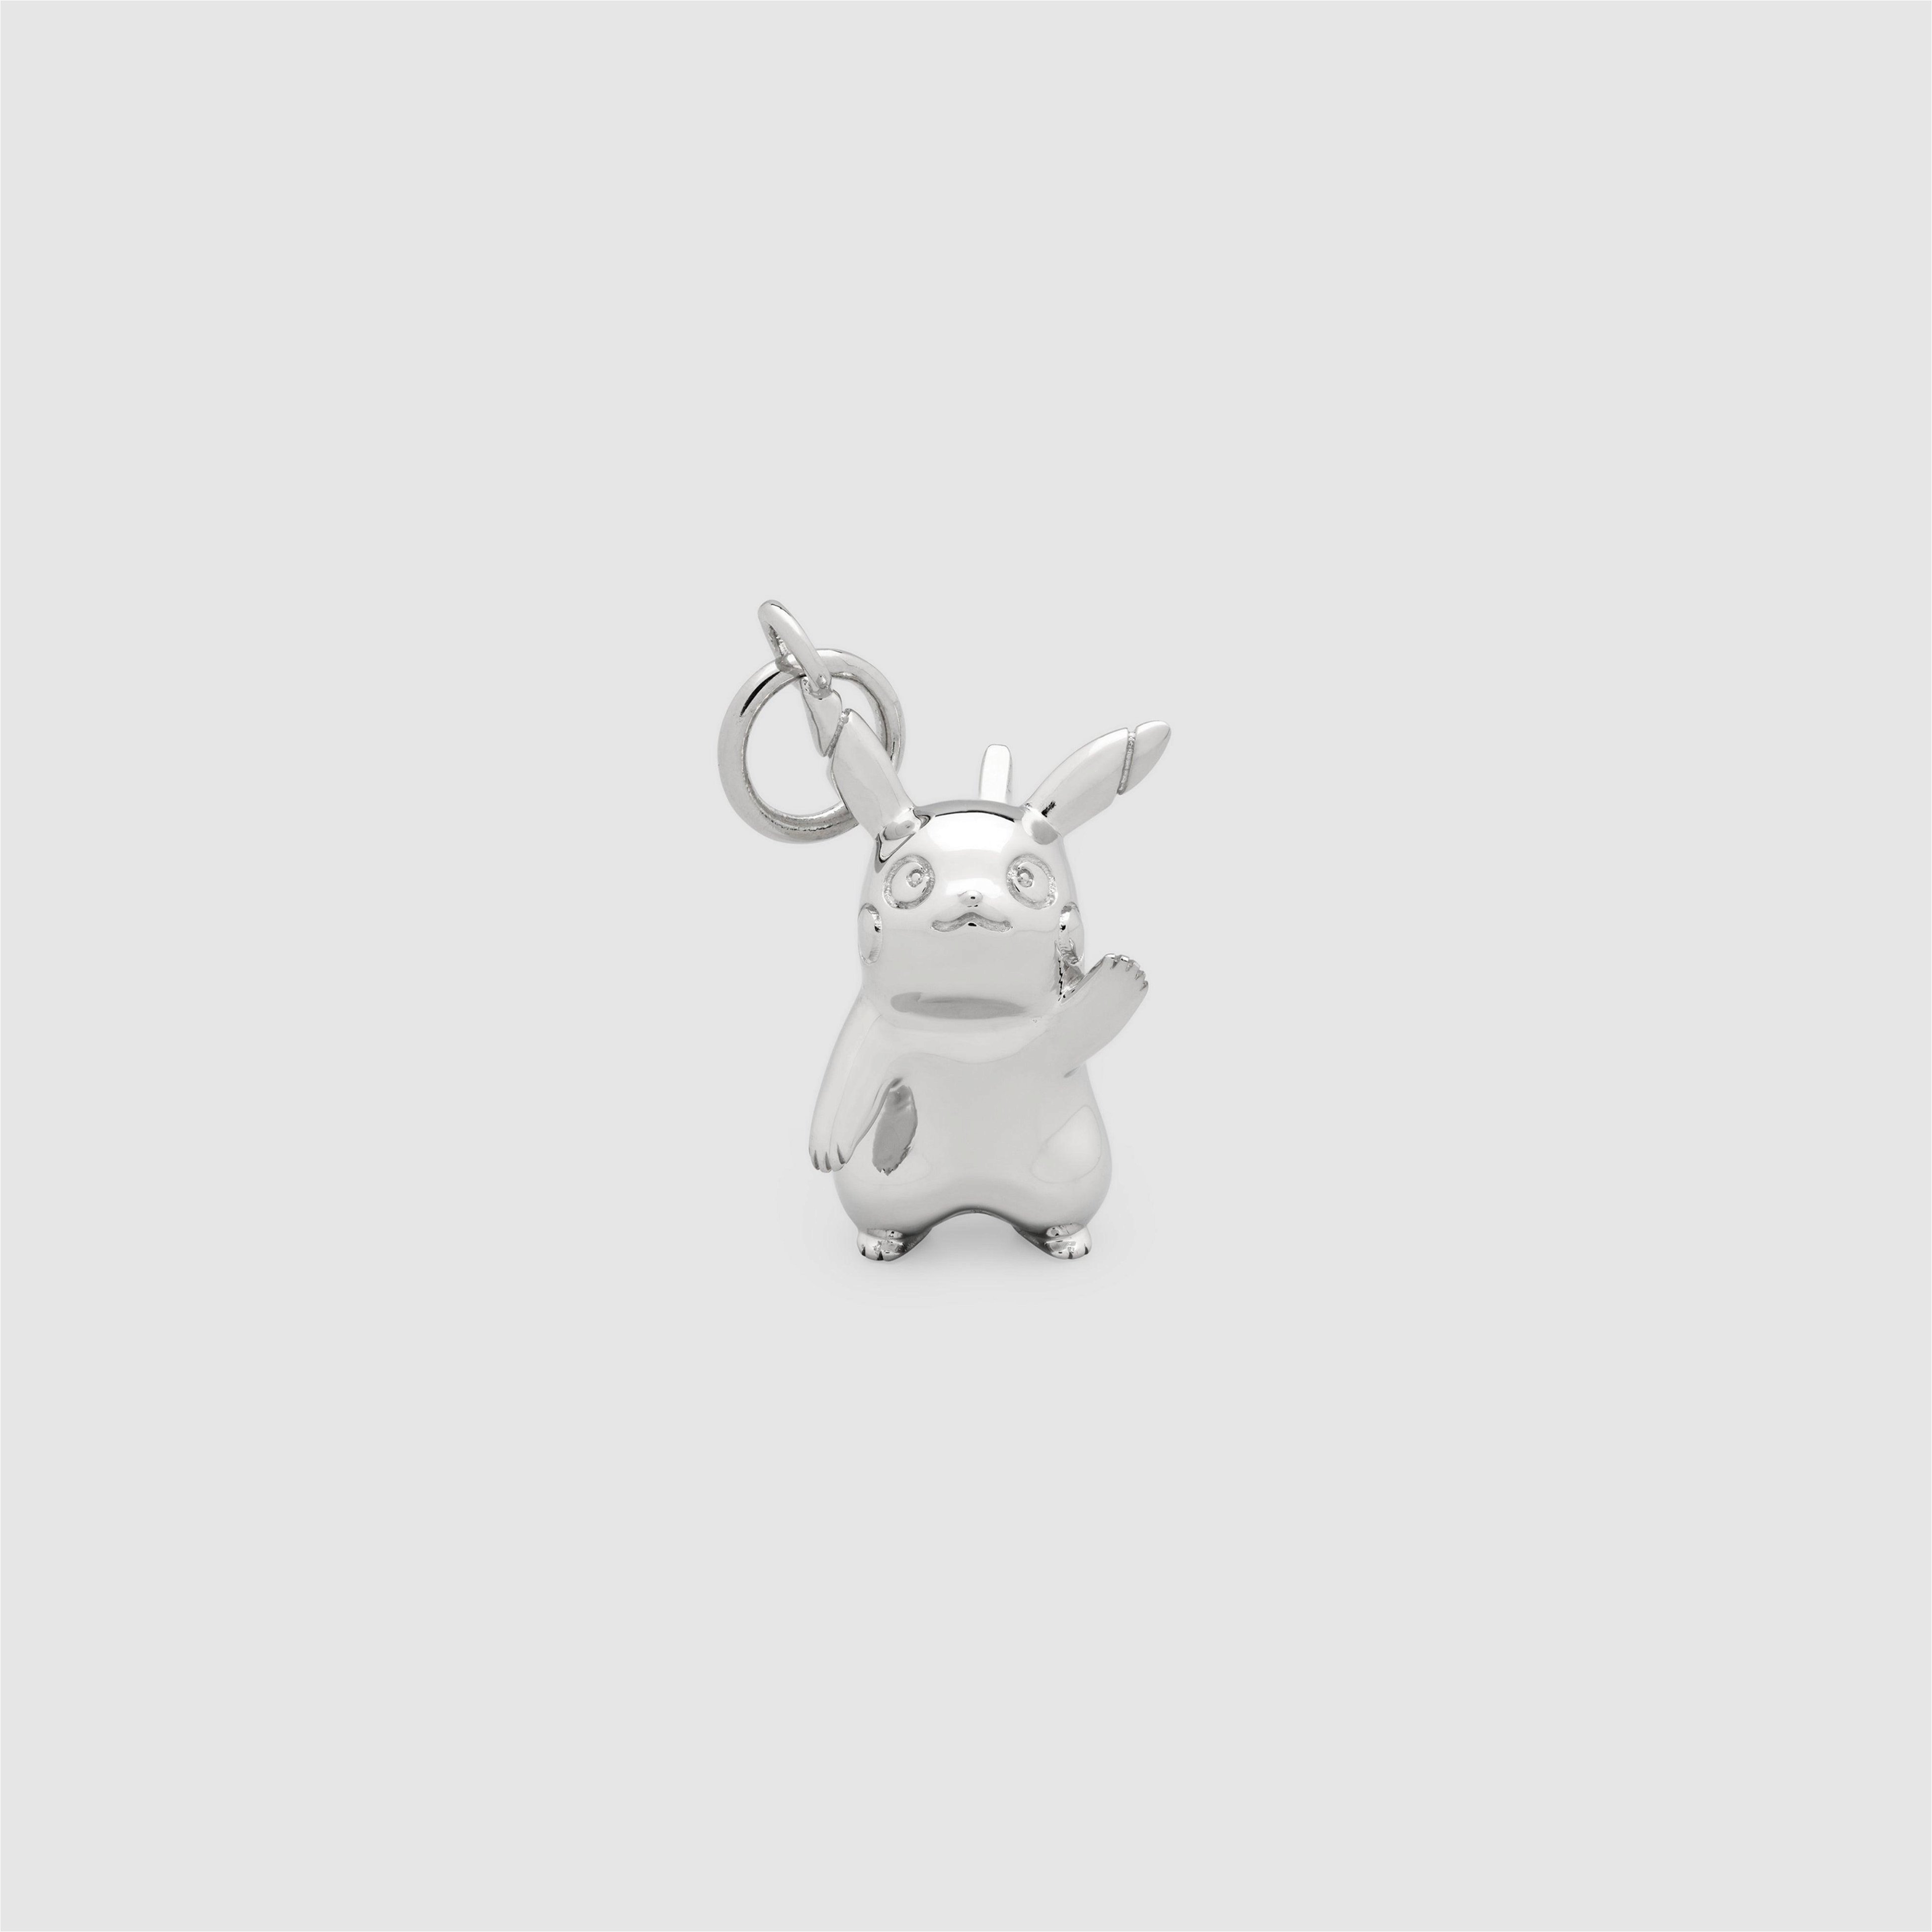 TOM WOOD  - Pikachu Hello Charm - (Sterling Silver) by TOM WOOD